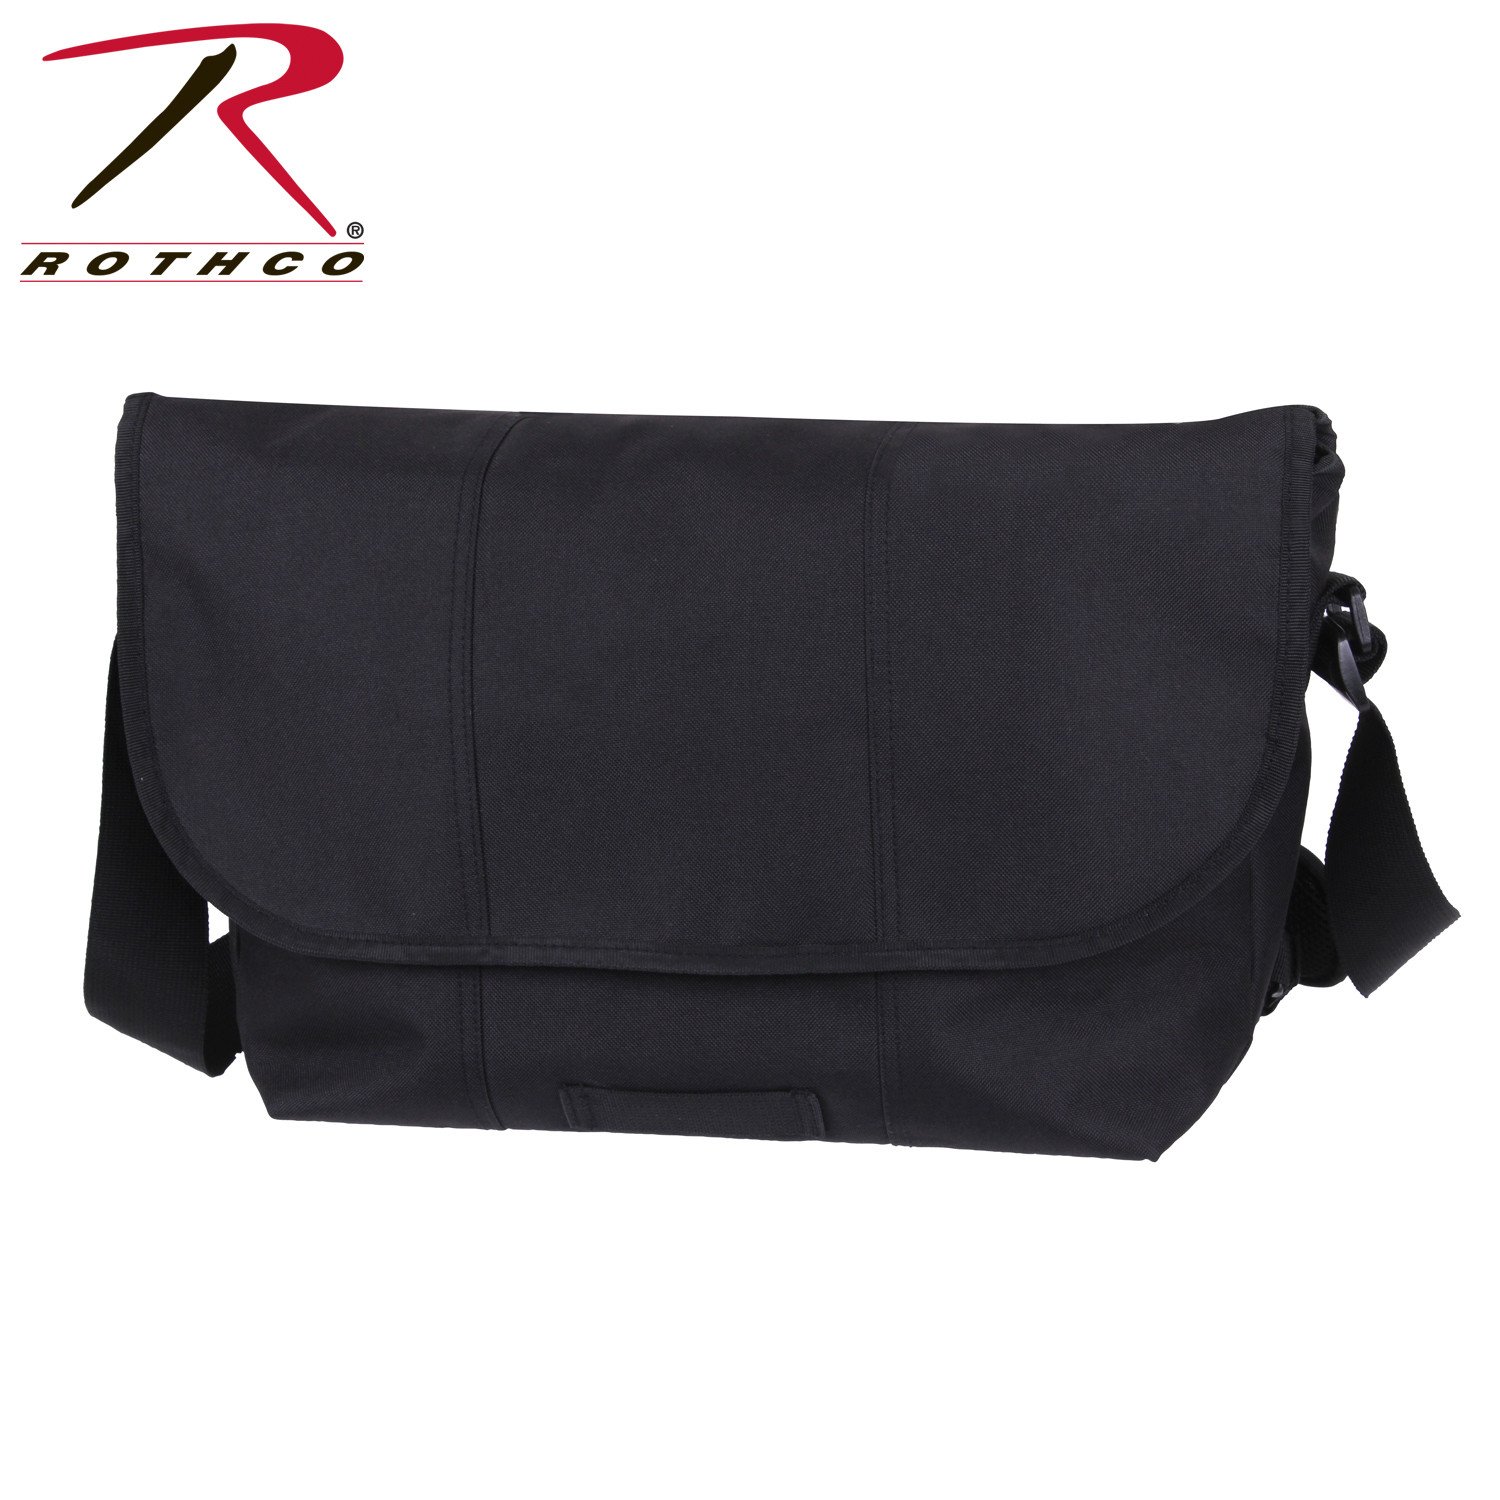 Rothco Polyester Elusion Messenger Bag Item # 39198 Black